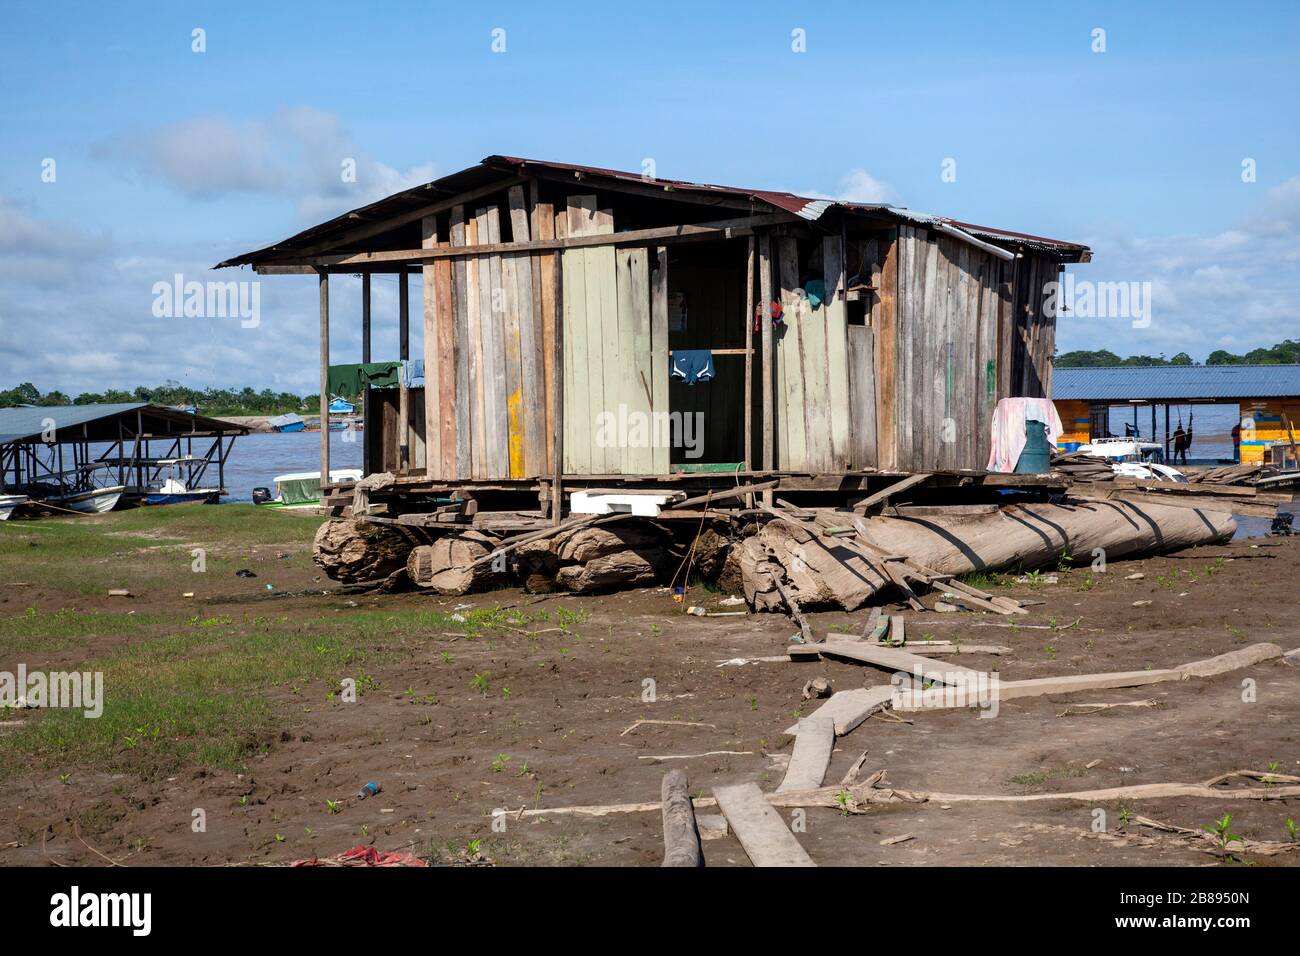 Schwimmendes Haus, Heim, Hausboot, am Fluss Amazon, Kolumbien, Südamerika  Stockfotografie - Alamy